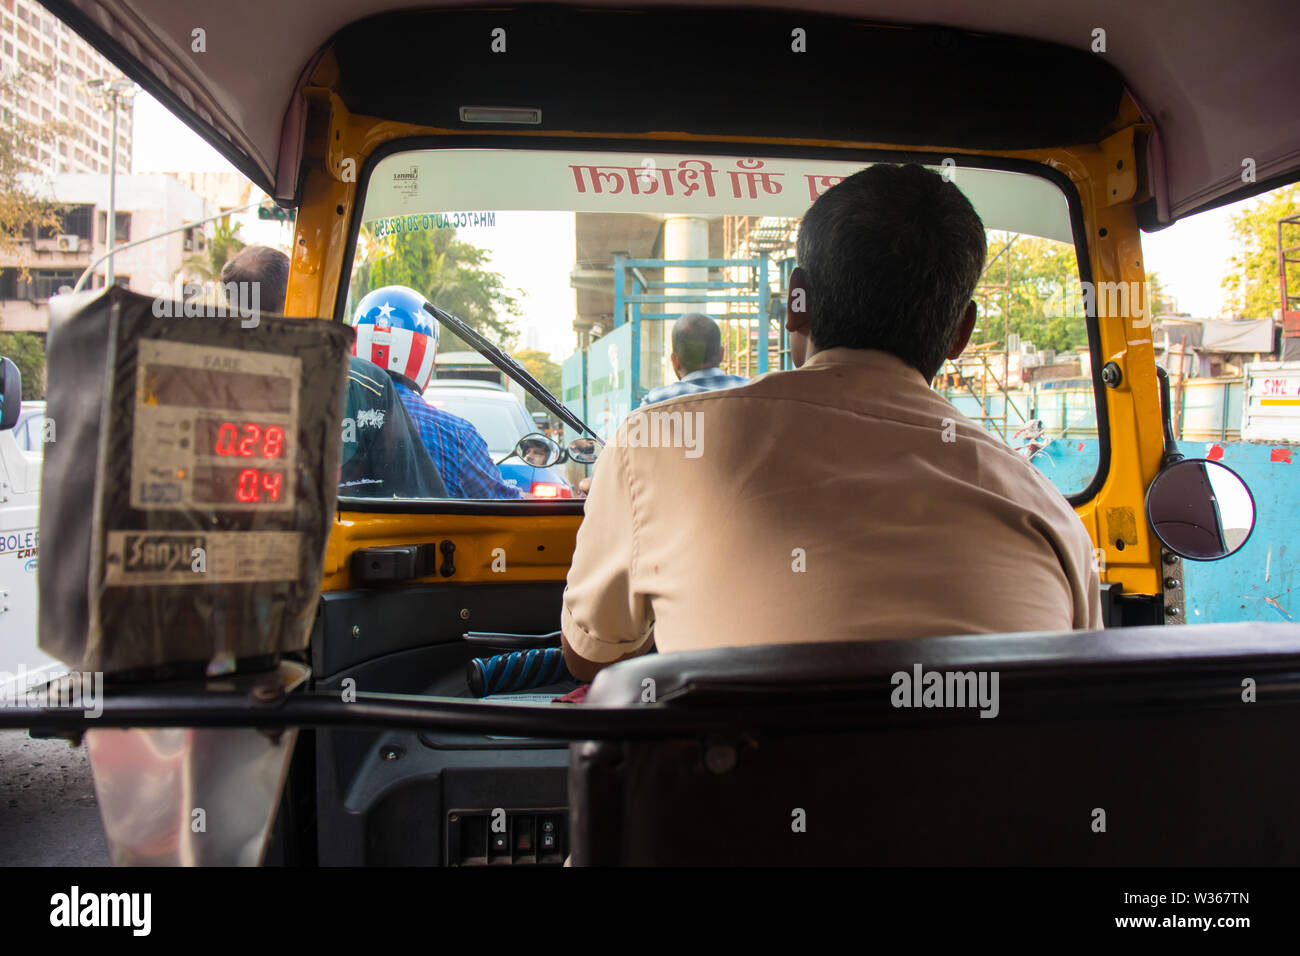 Mumbai, Maharashtra, india - JUNE 4th, 2019 : Inside view of auto-rickshaw driver driving on streets of Mumbai traffic - Image Stock Photo